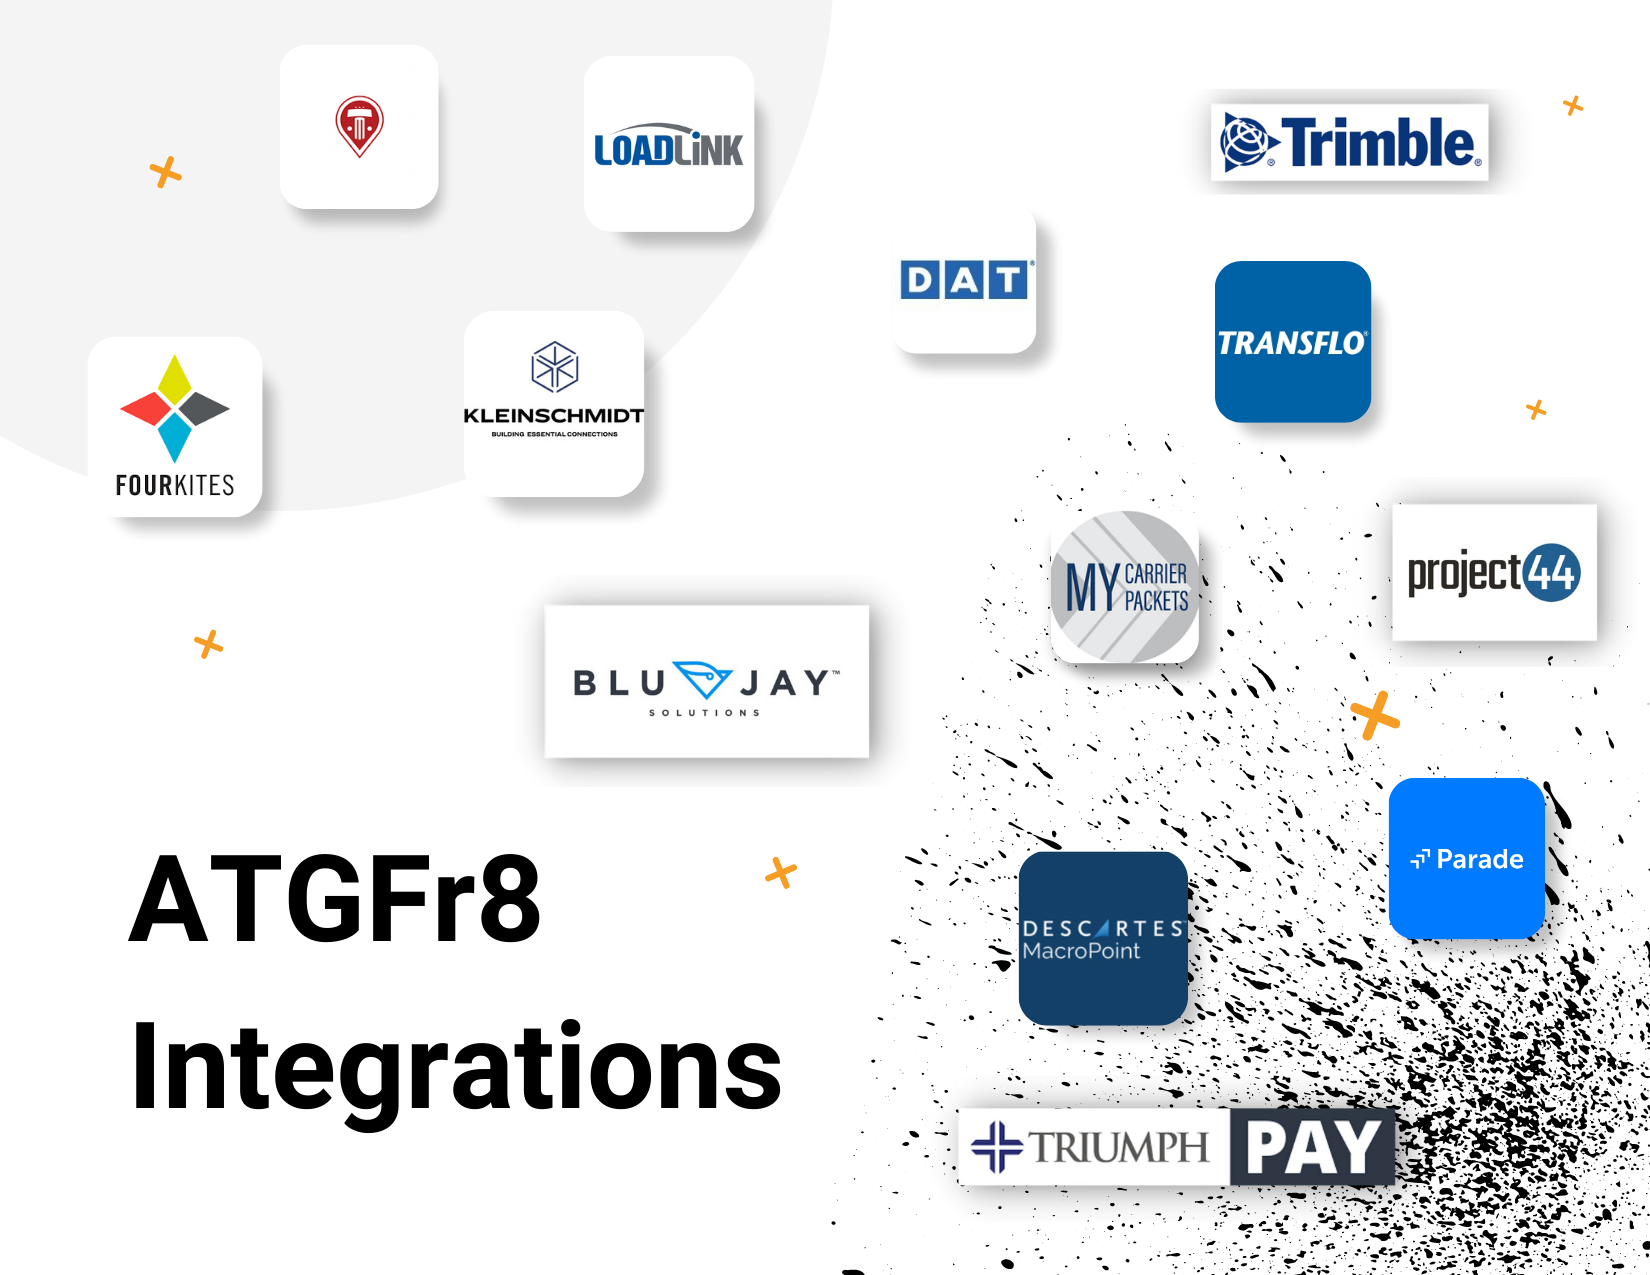 ATGFr8 integrations